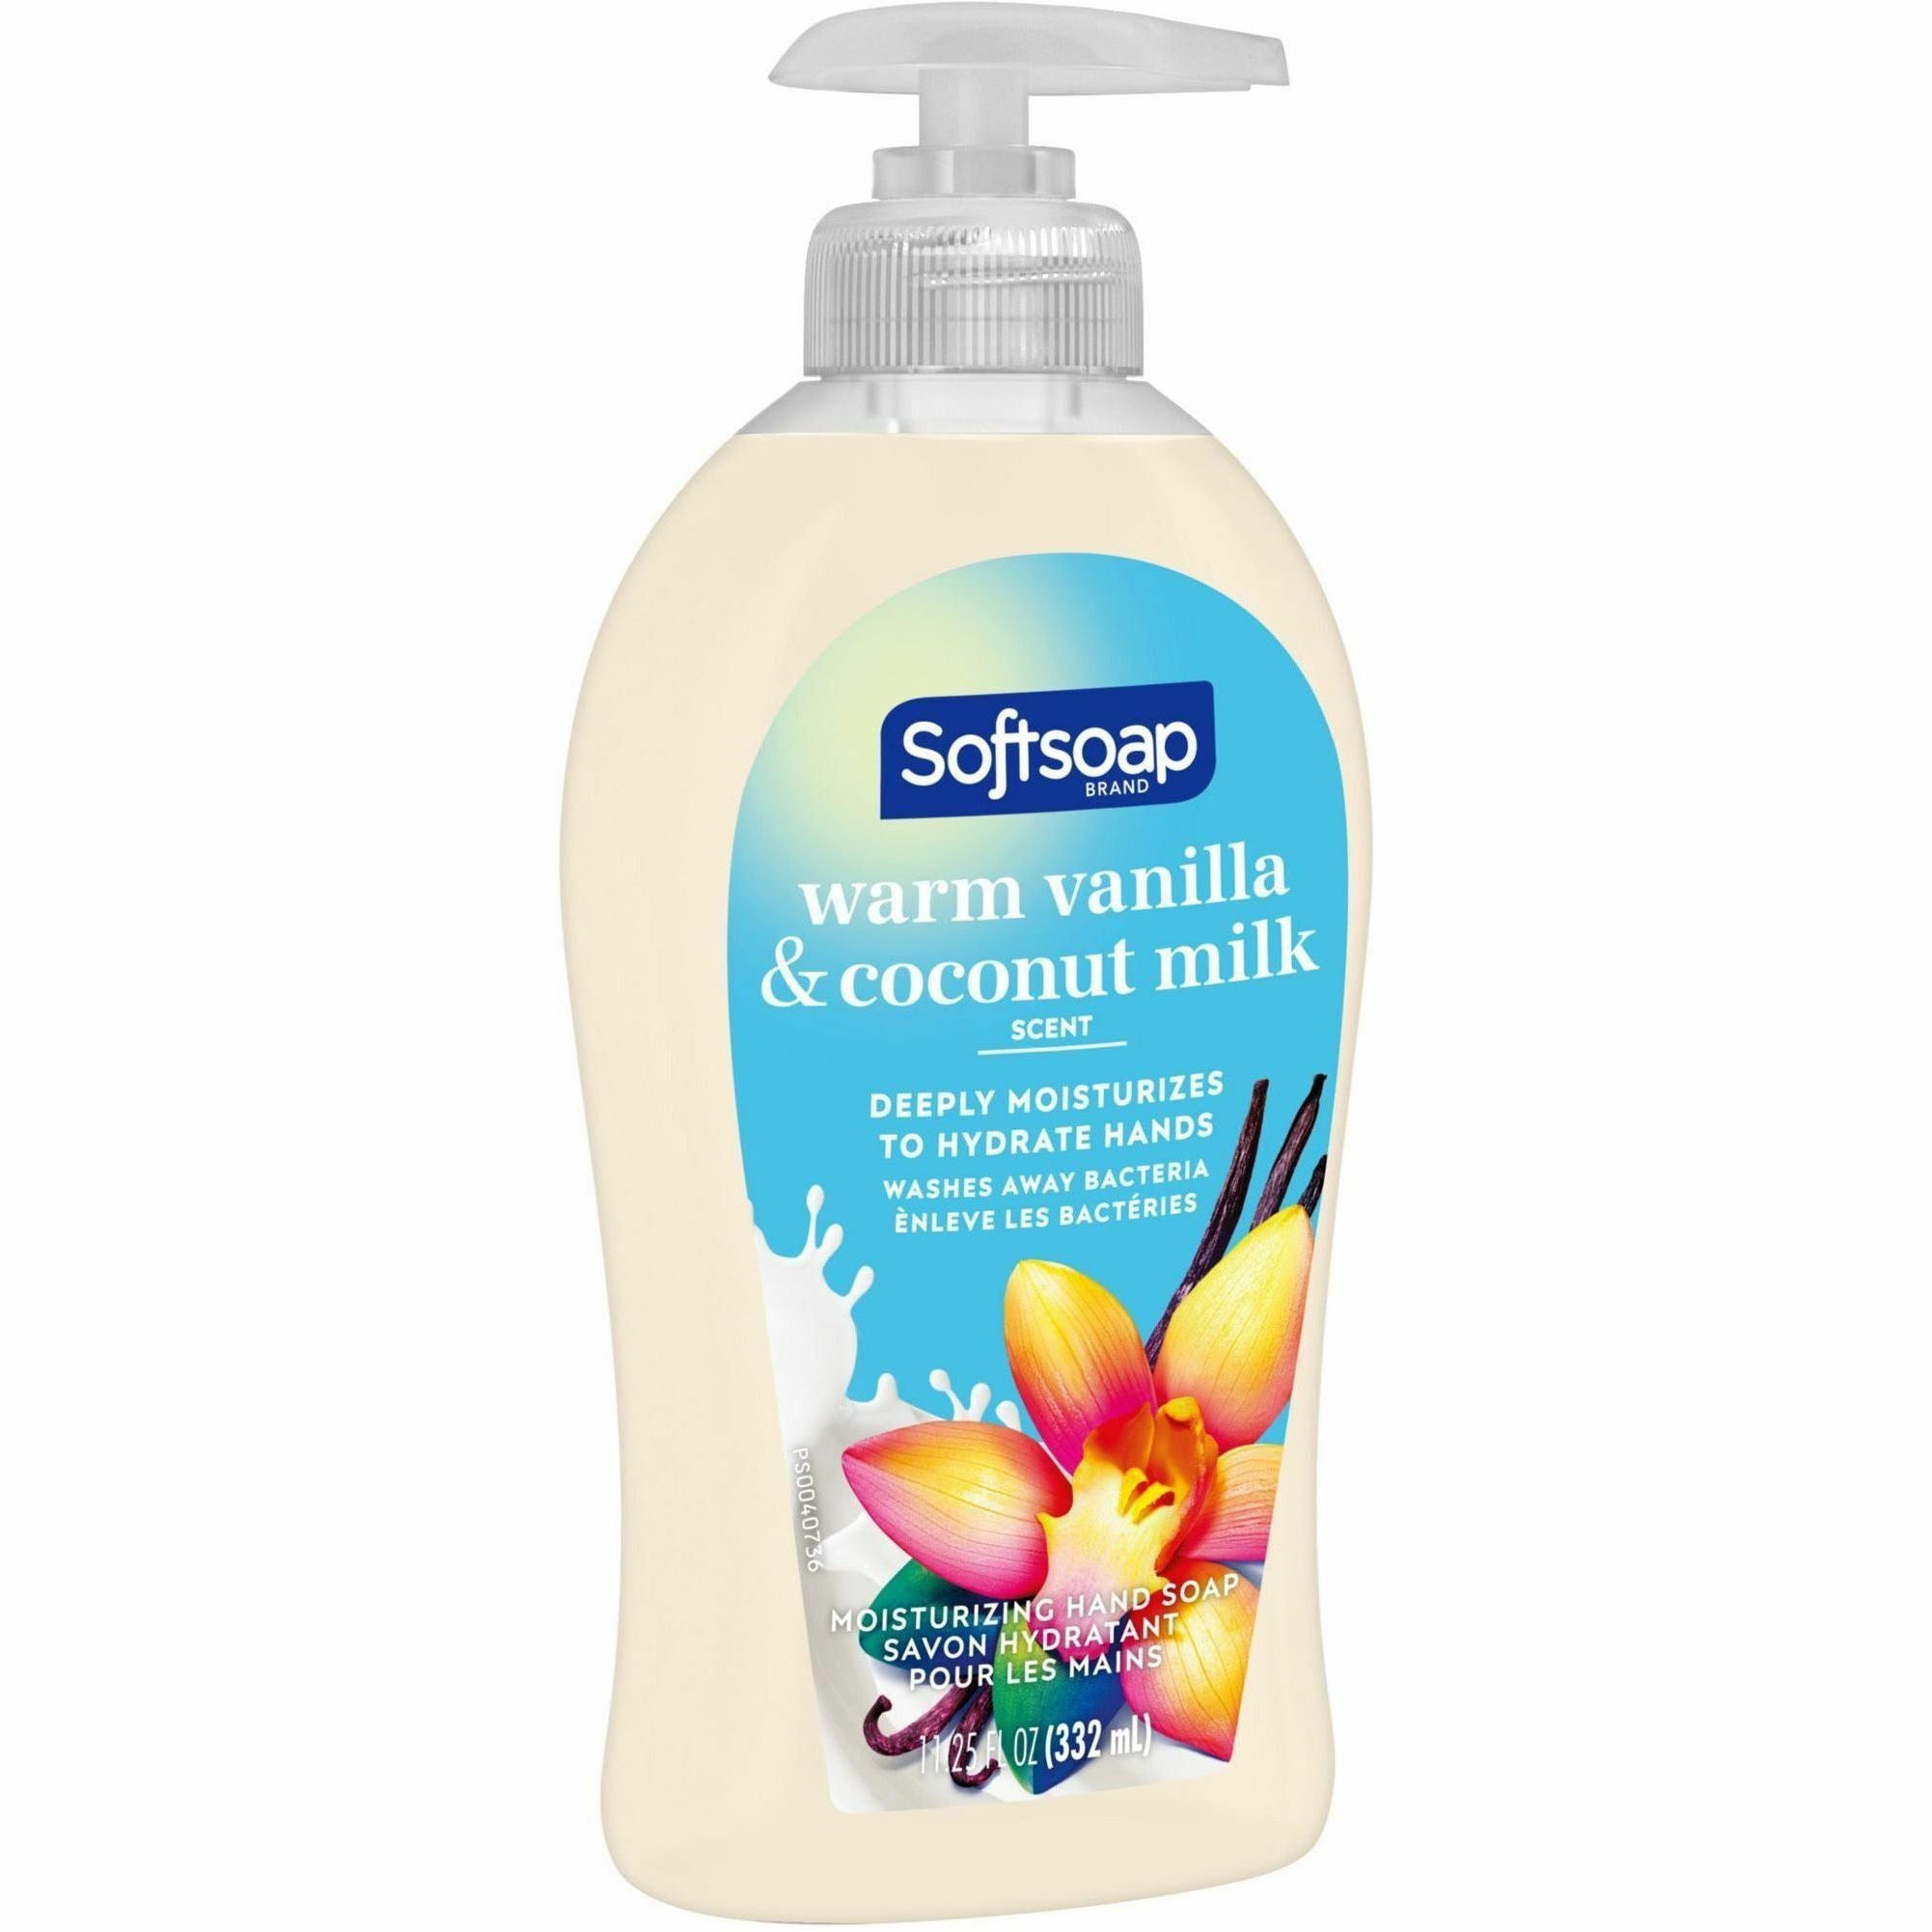 softsoap-warm-vanilla-hand-soap-warm-vanilla-&-coconut-milk-scentfor-113-fl-oz-3327-ml-pump-bottle-dispenser-bacteria-remover-dirt-remover-hand-skin-moisturizing-white-refillable-recyclable-paraben-free-phthalate-free-biodeg_cpcus07059a - 4